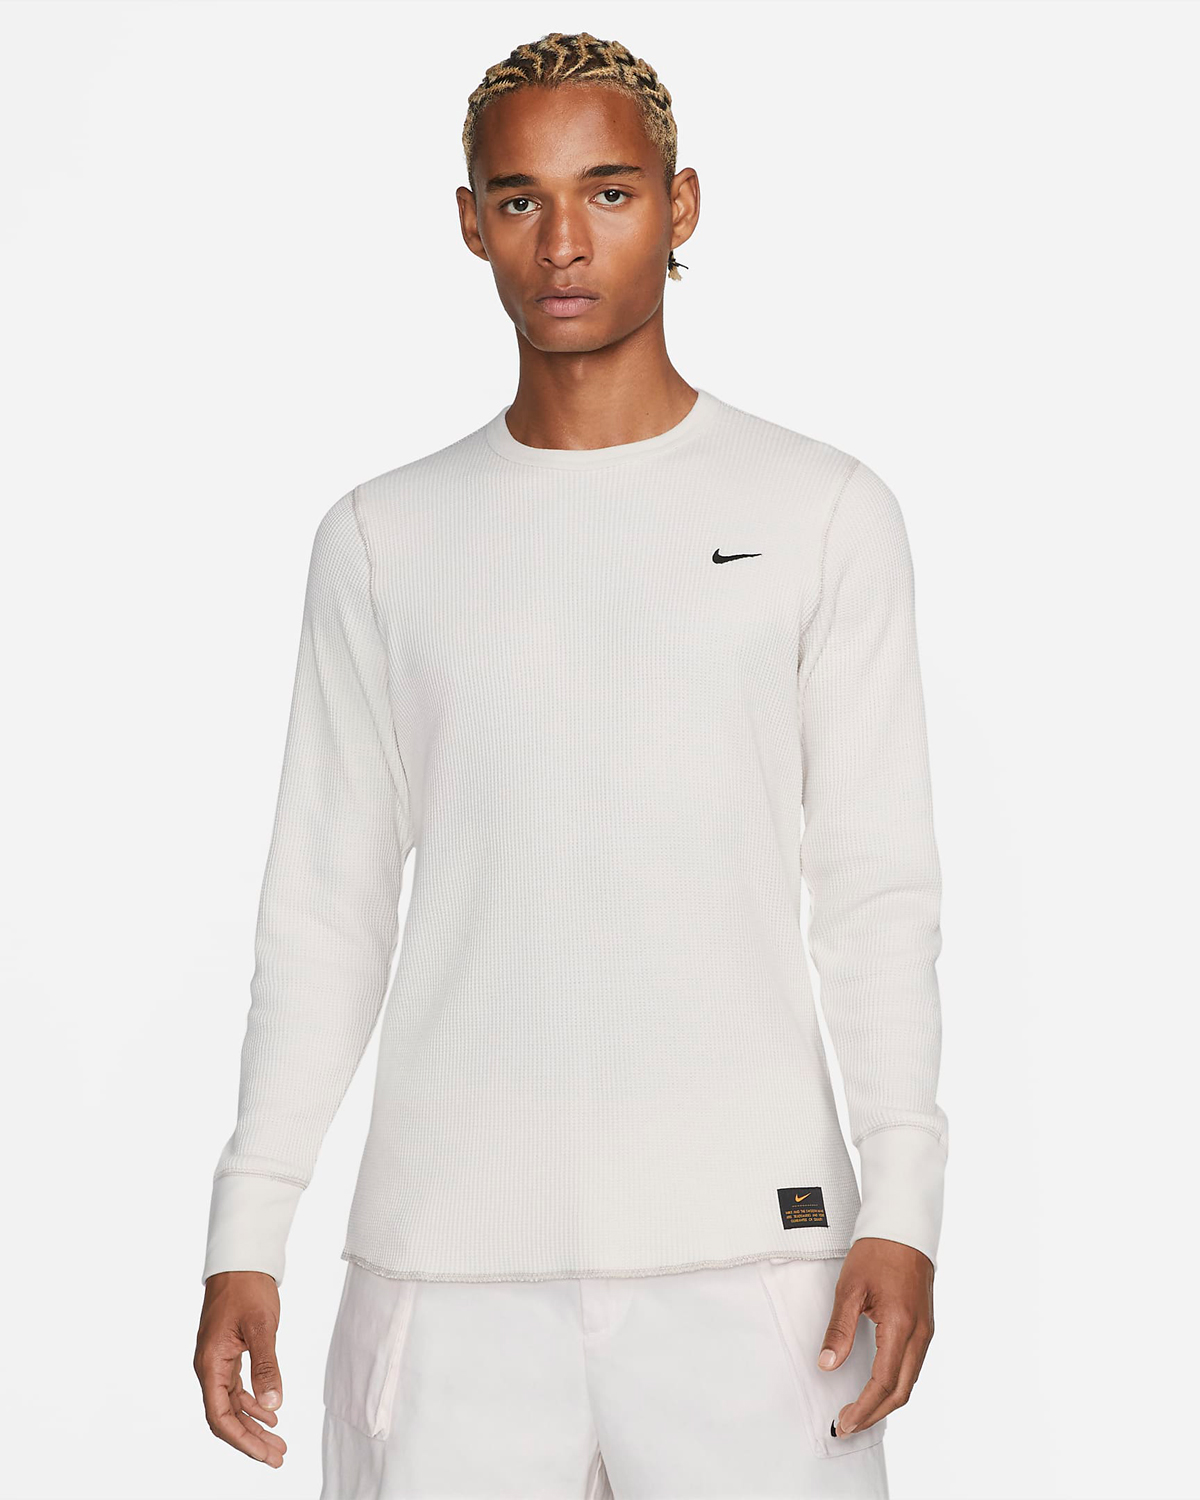 Nike-Life-Long-Sleeve-Waffle-Top-Shirt-Phantom-1